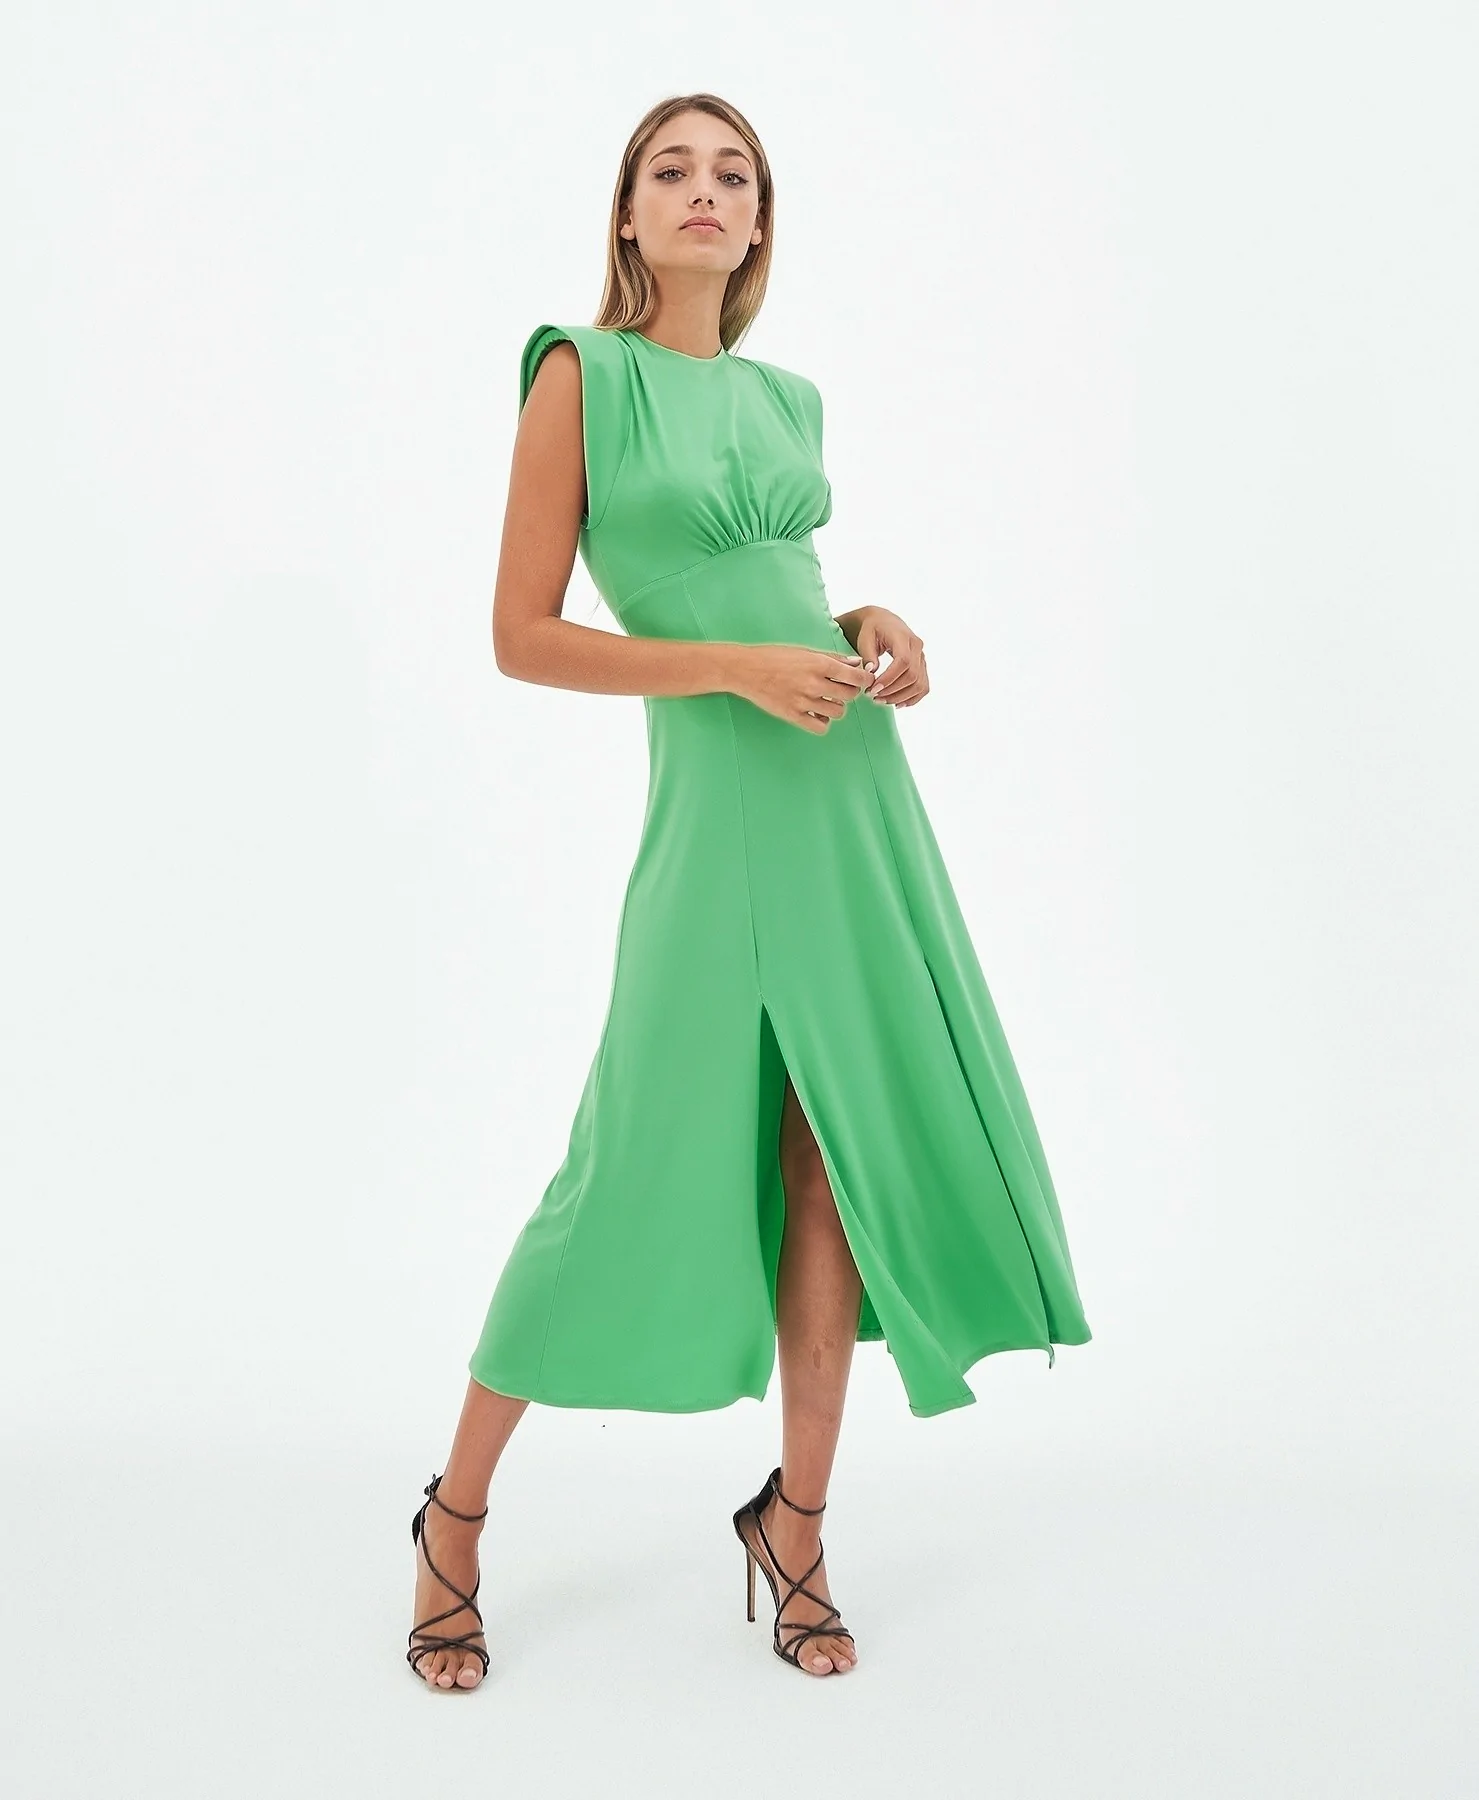 Epilota Green Dress - Fernando Claro